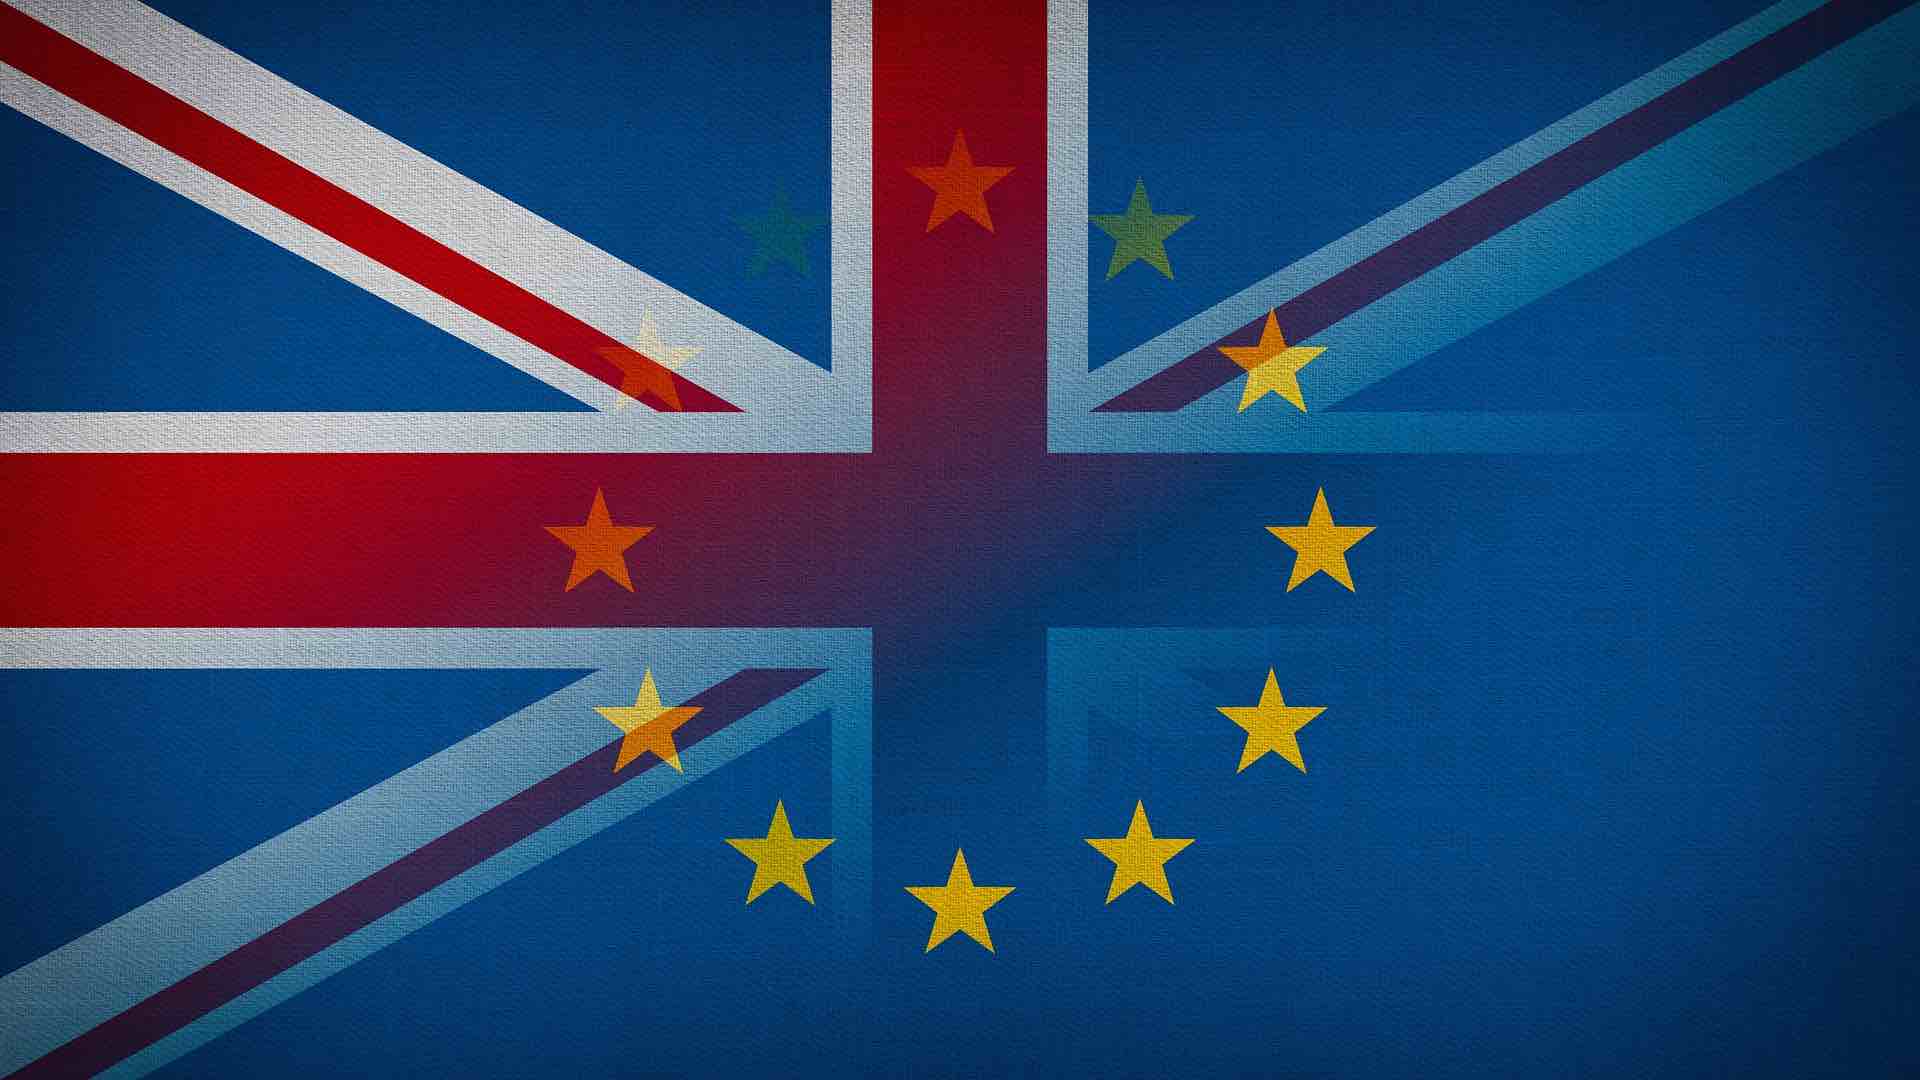 Decorative image of UK and EU flags